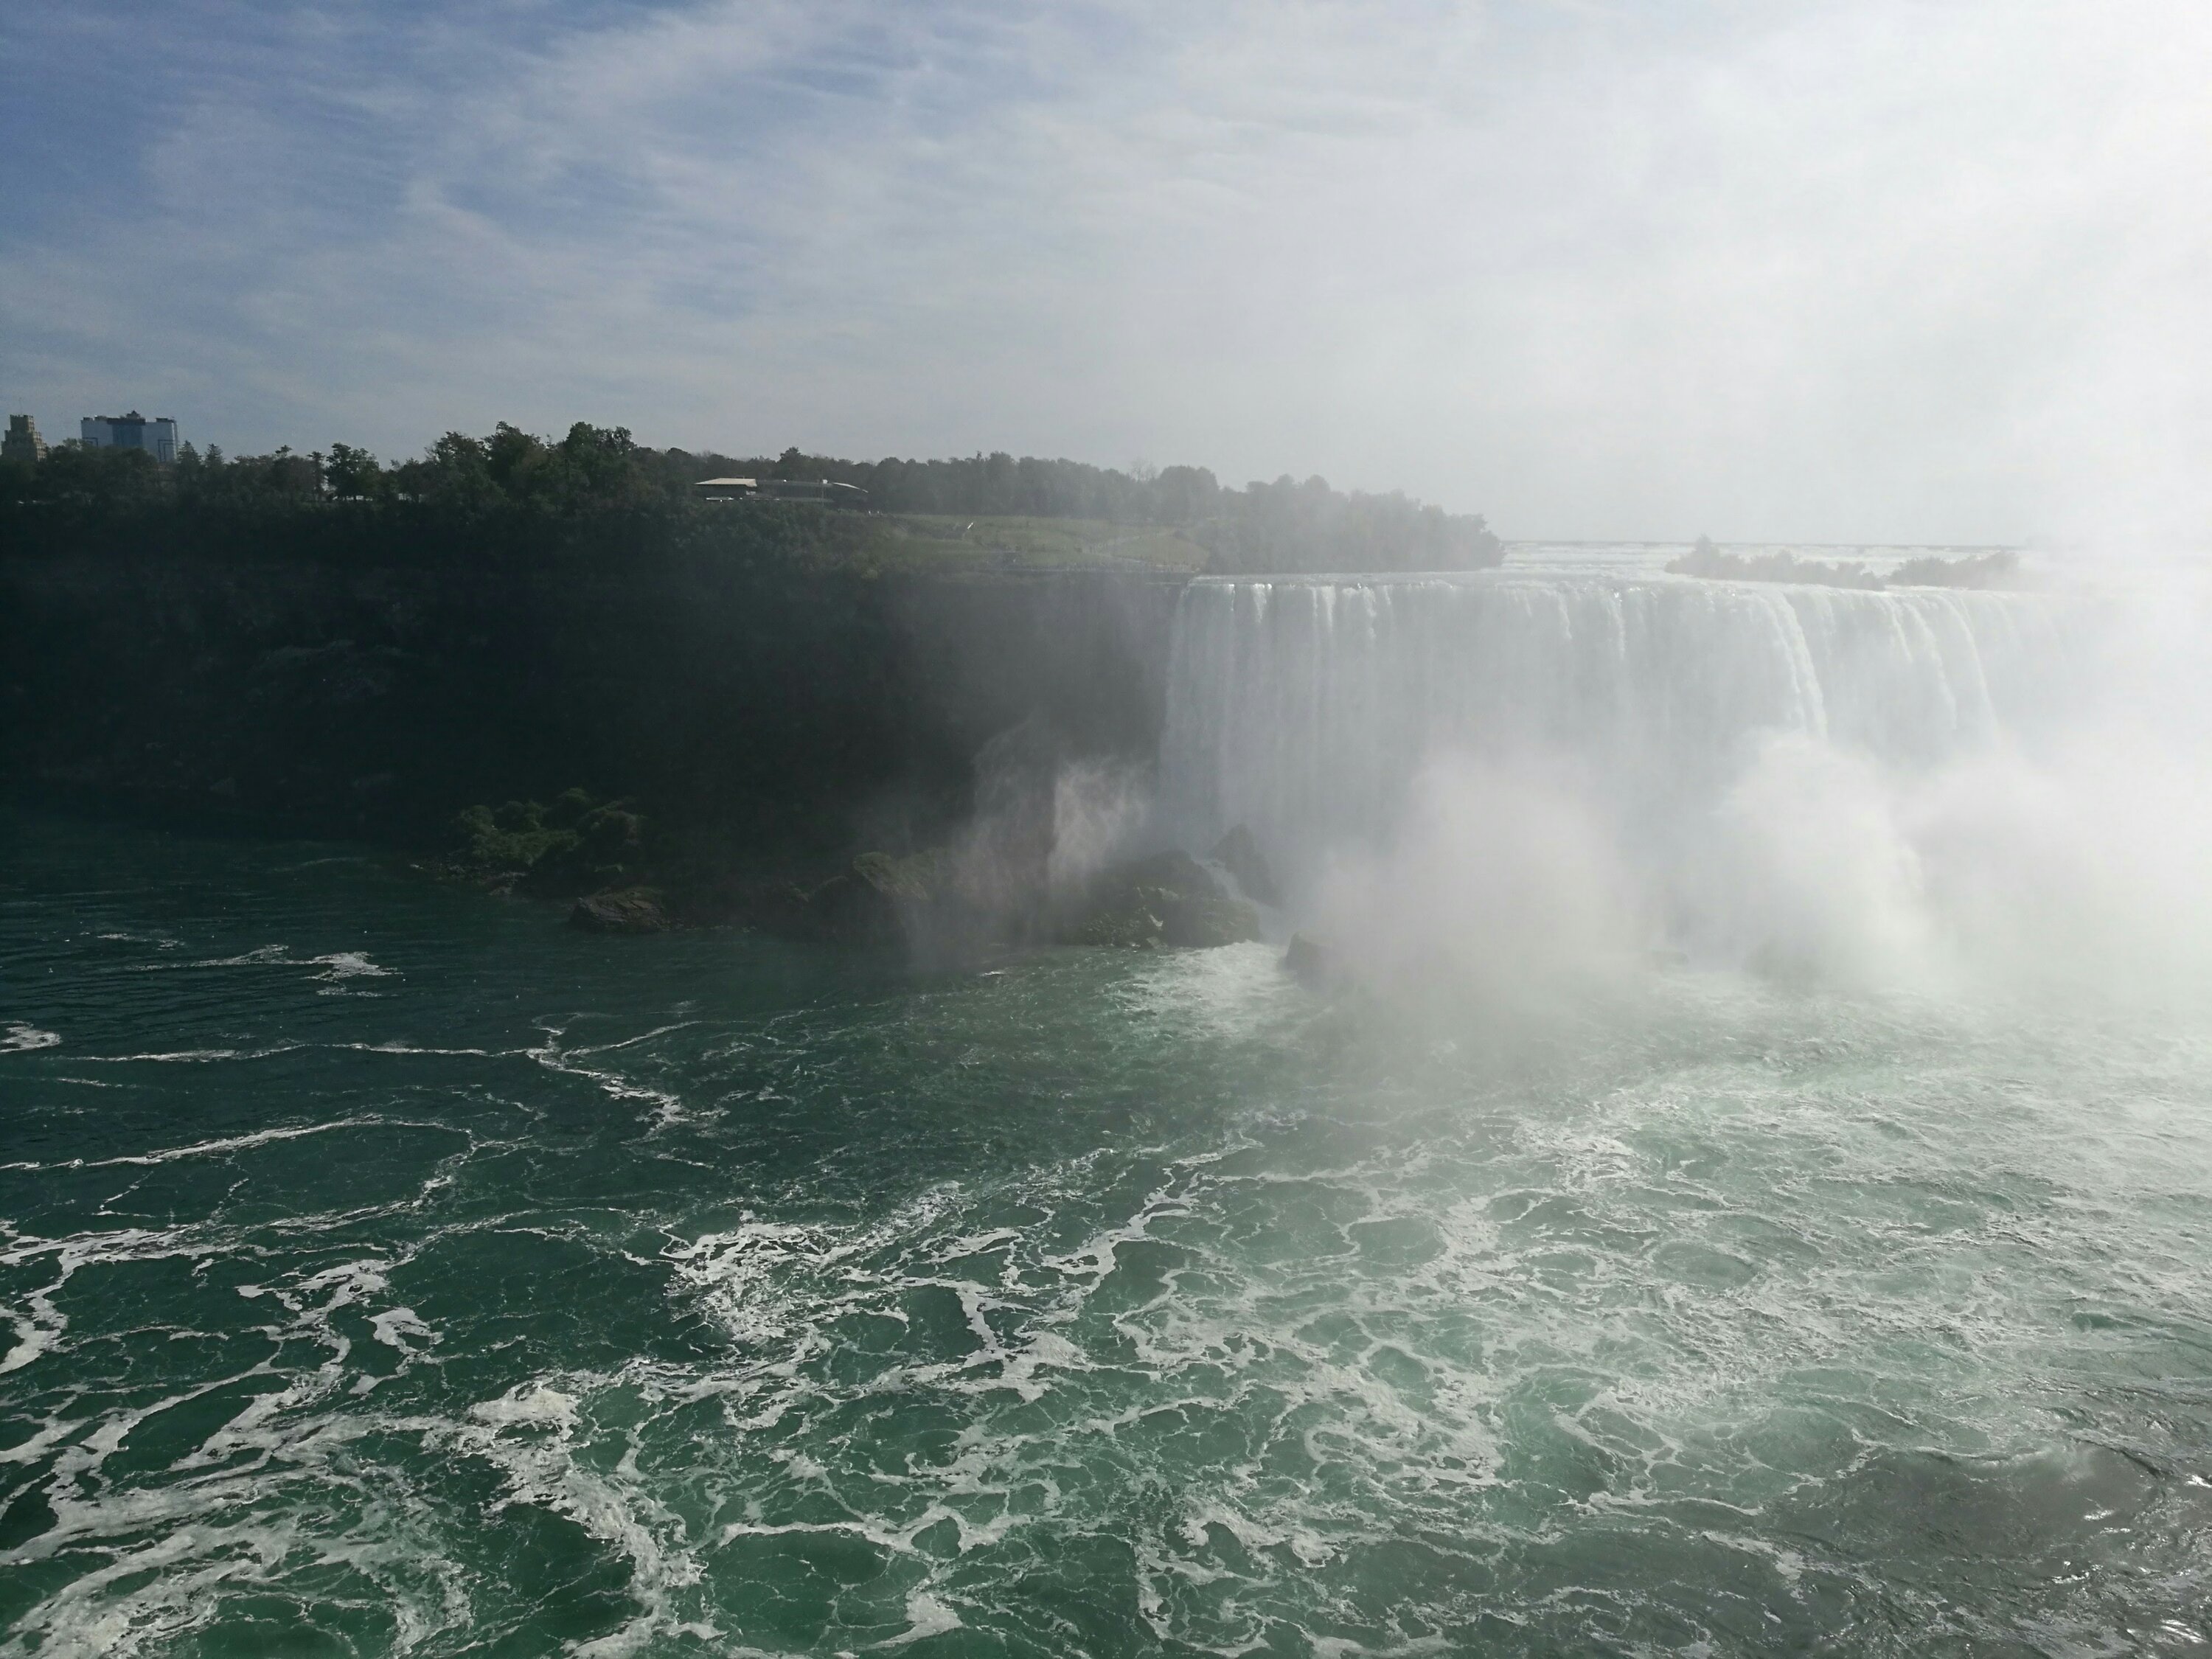 The impressive Niagara Falls